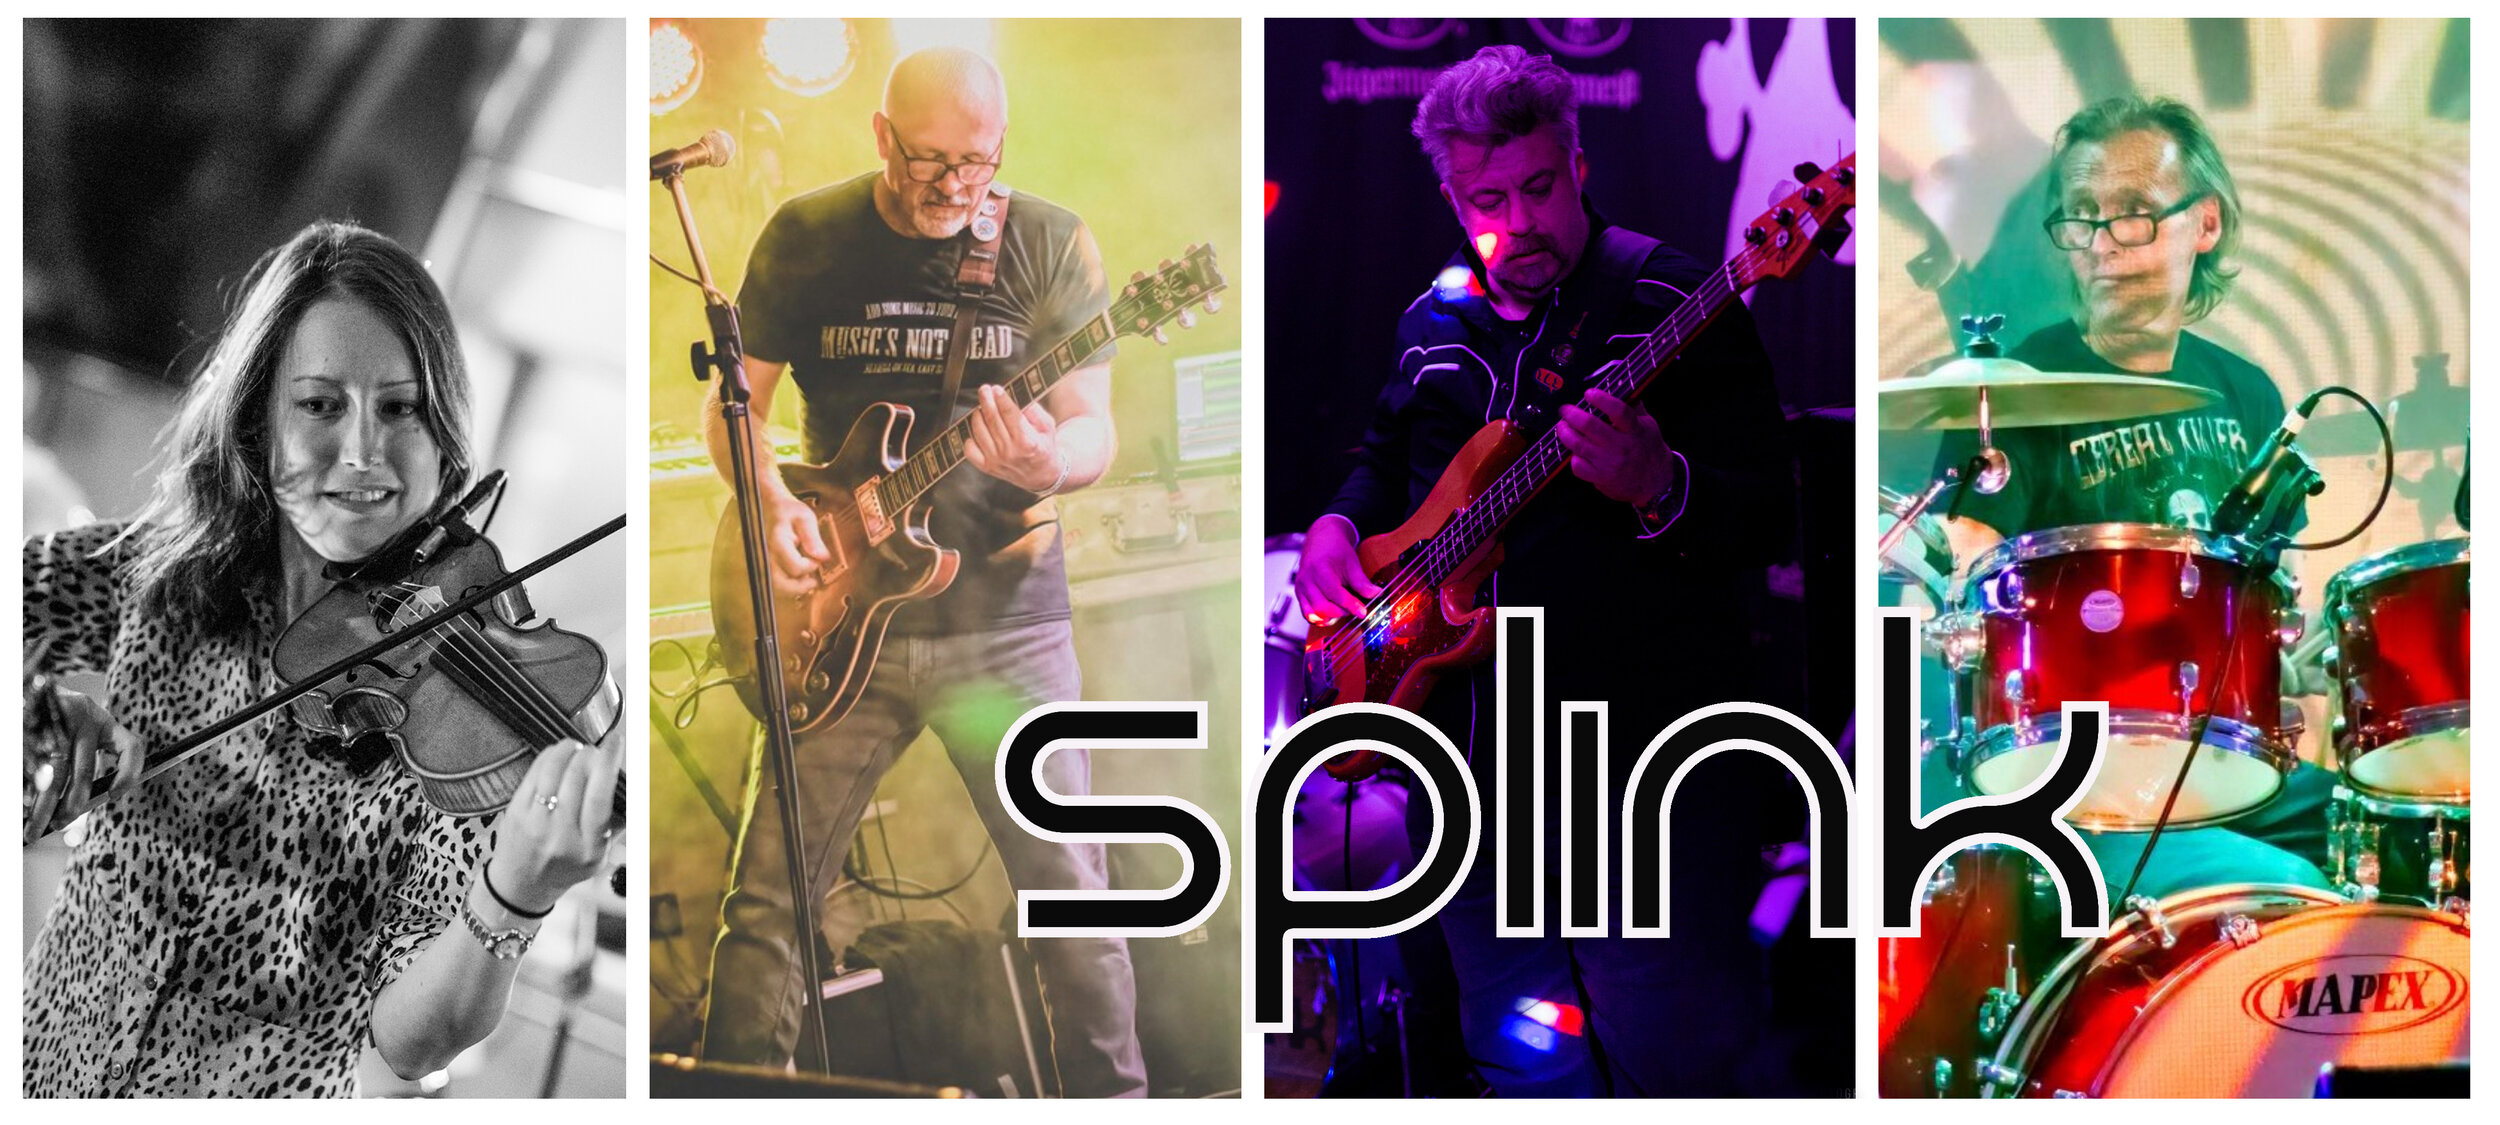 Splink Band group with Vikki.jpg